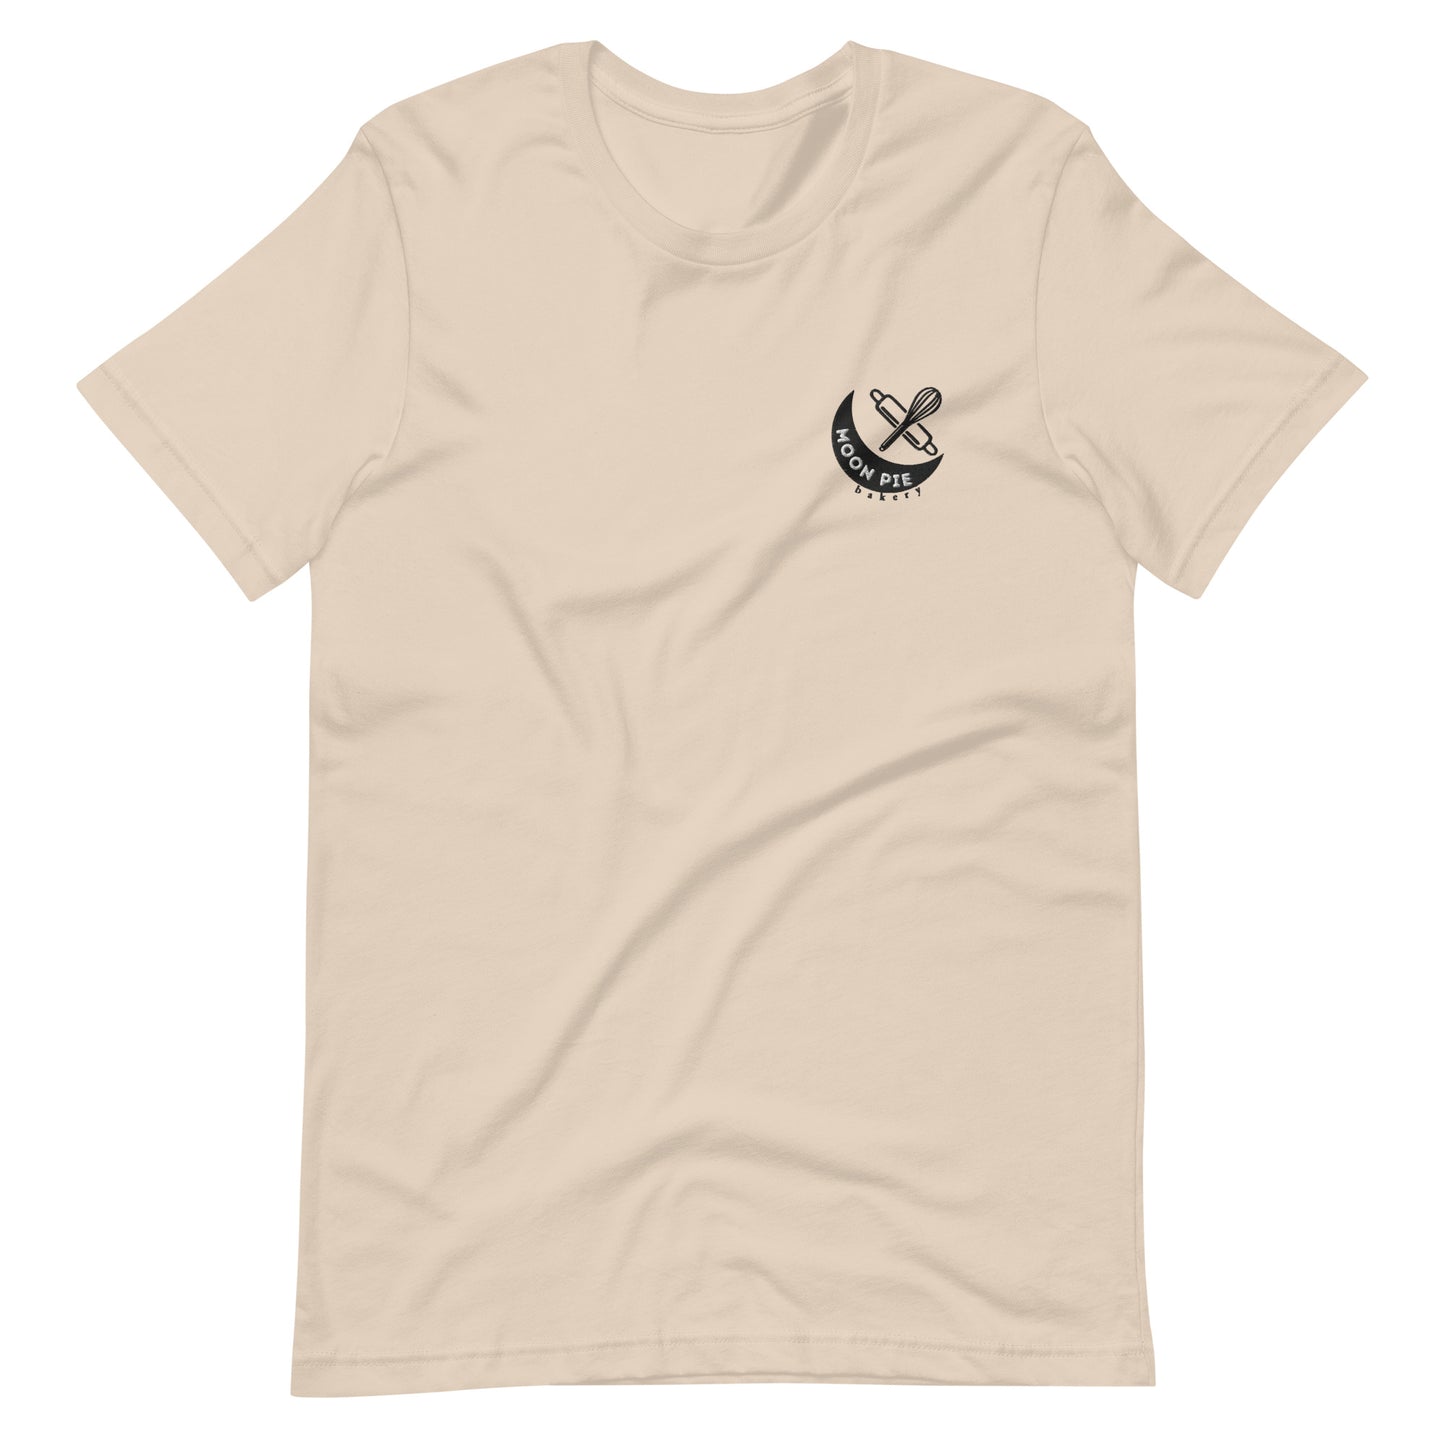 Moon Pie Bakery T-Shirt